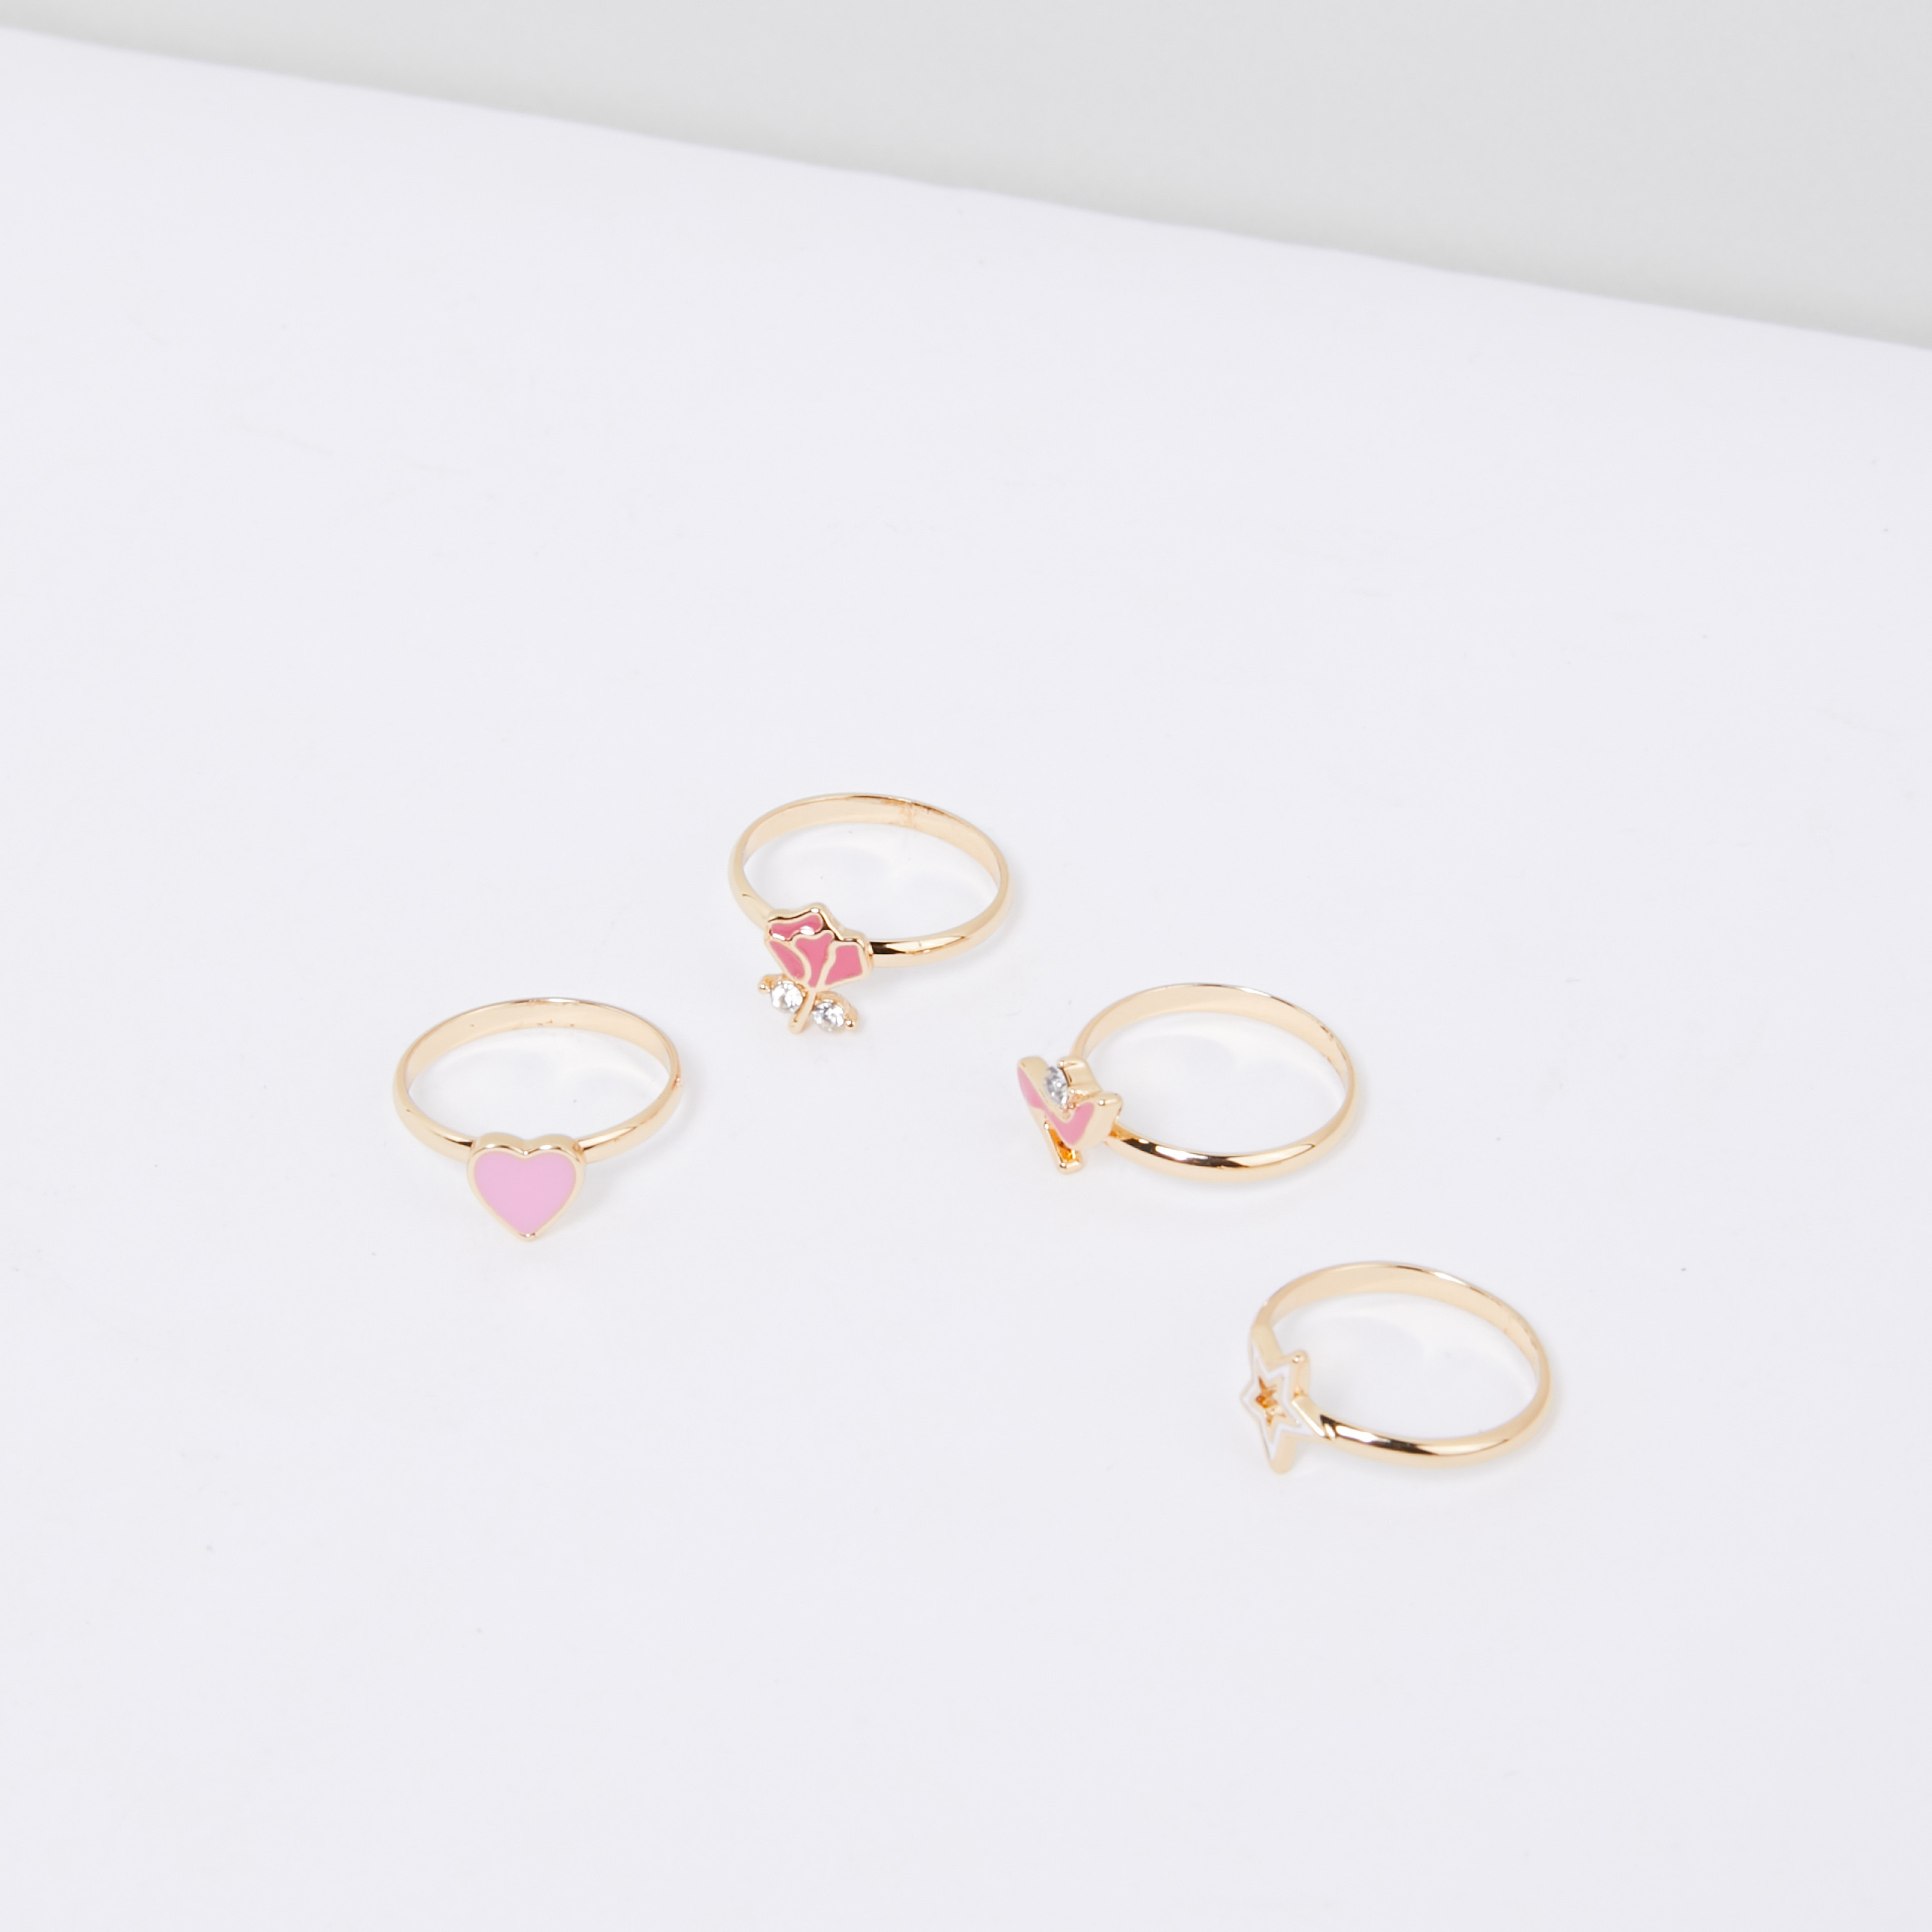 5pcs/set Crystal Midi Knuckle Wave Finger Rings Women Ring Set Wedding  Jewelry | eBay